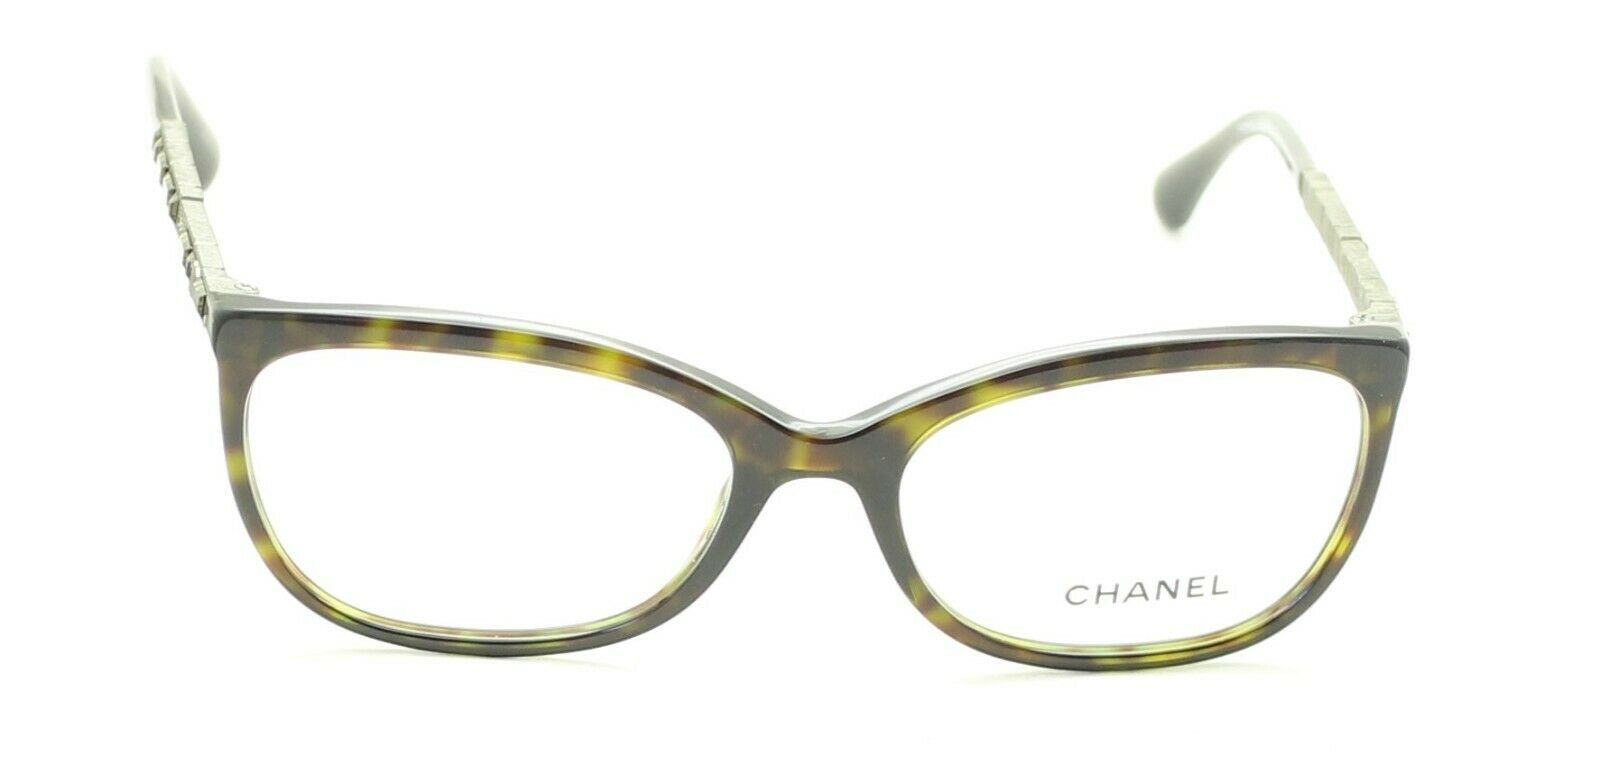 CHANEL 3305-B 714 54mm Eyewear FRAMES Eyeglasses RX Optical Glasses New - Italy